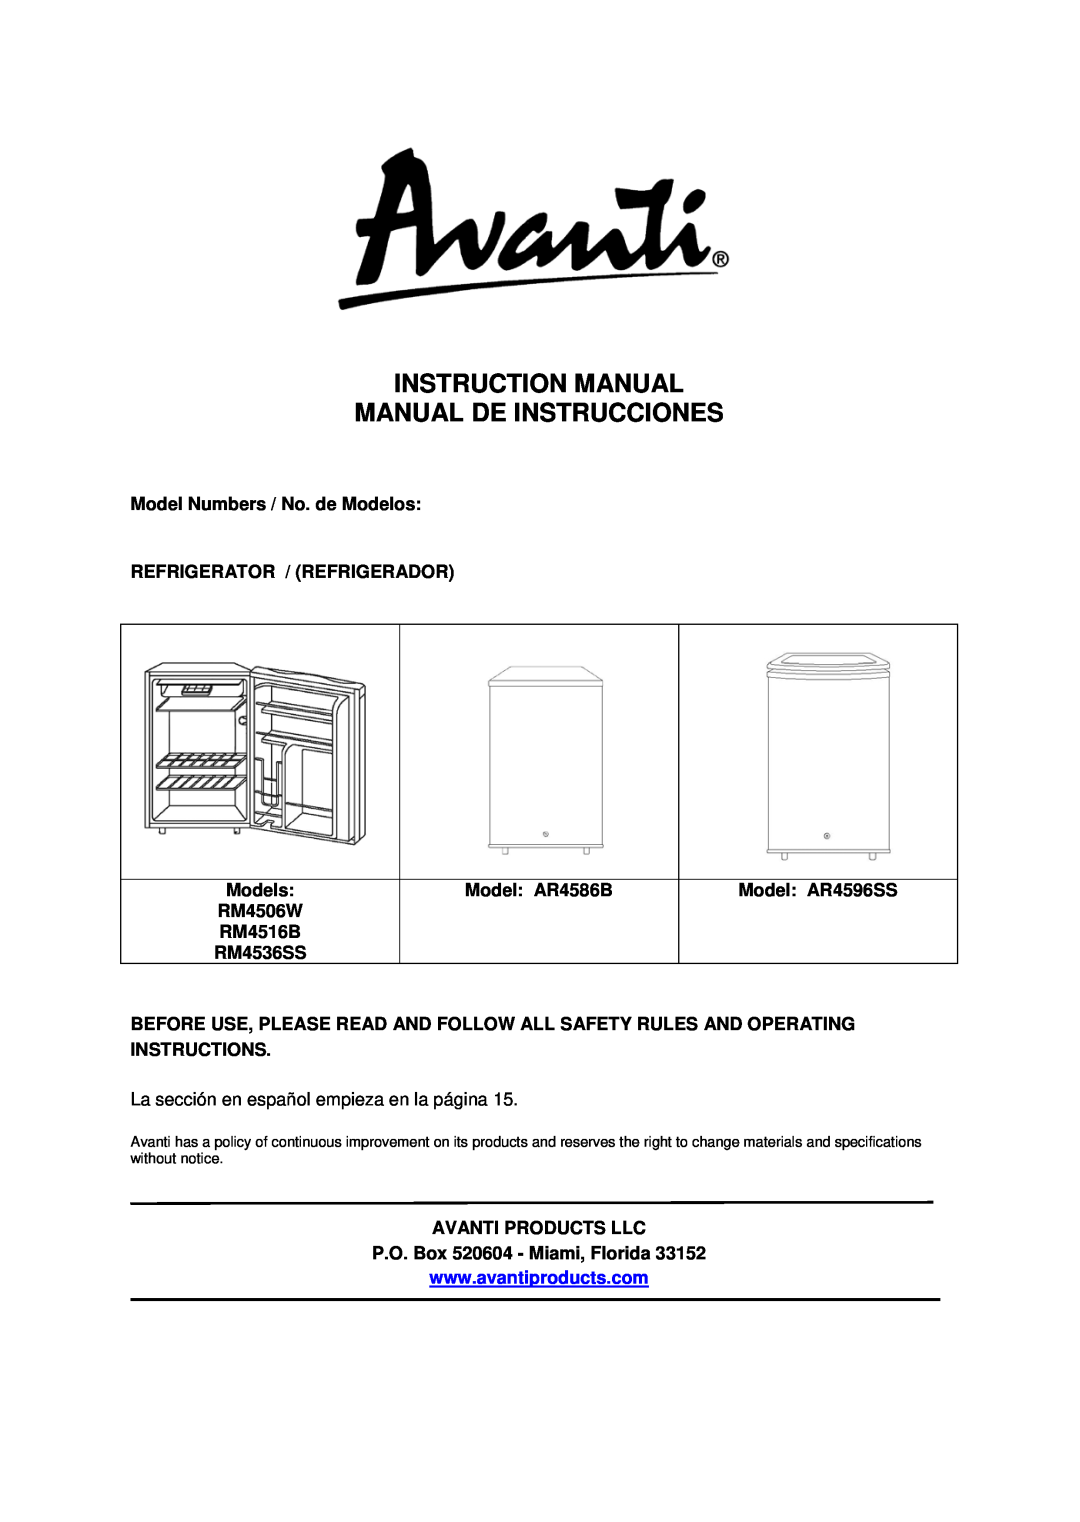 Avanti instruction manual Model Numbers / No. de Modelos, Refrigerator / Refrigerador, Model AR4586B, Model AR4596SS 